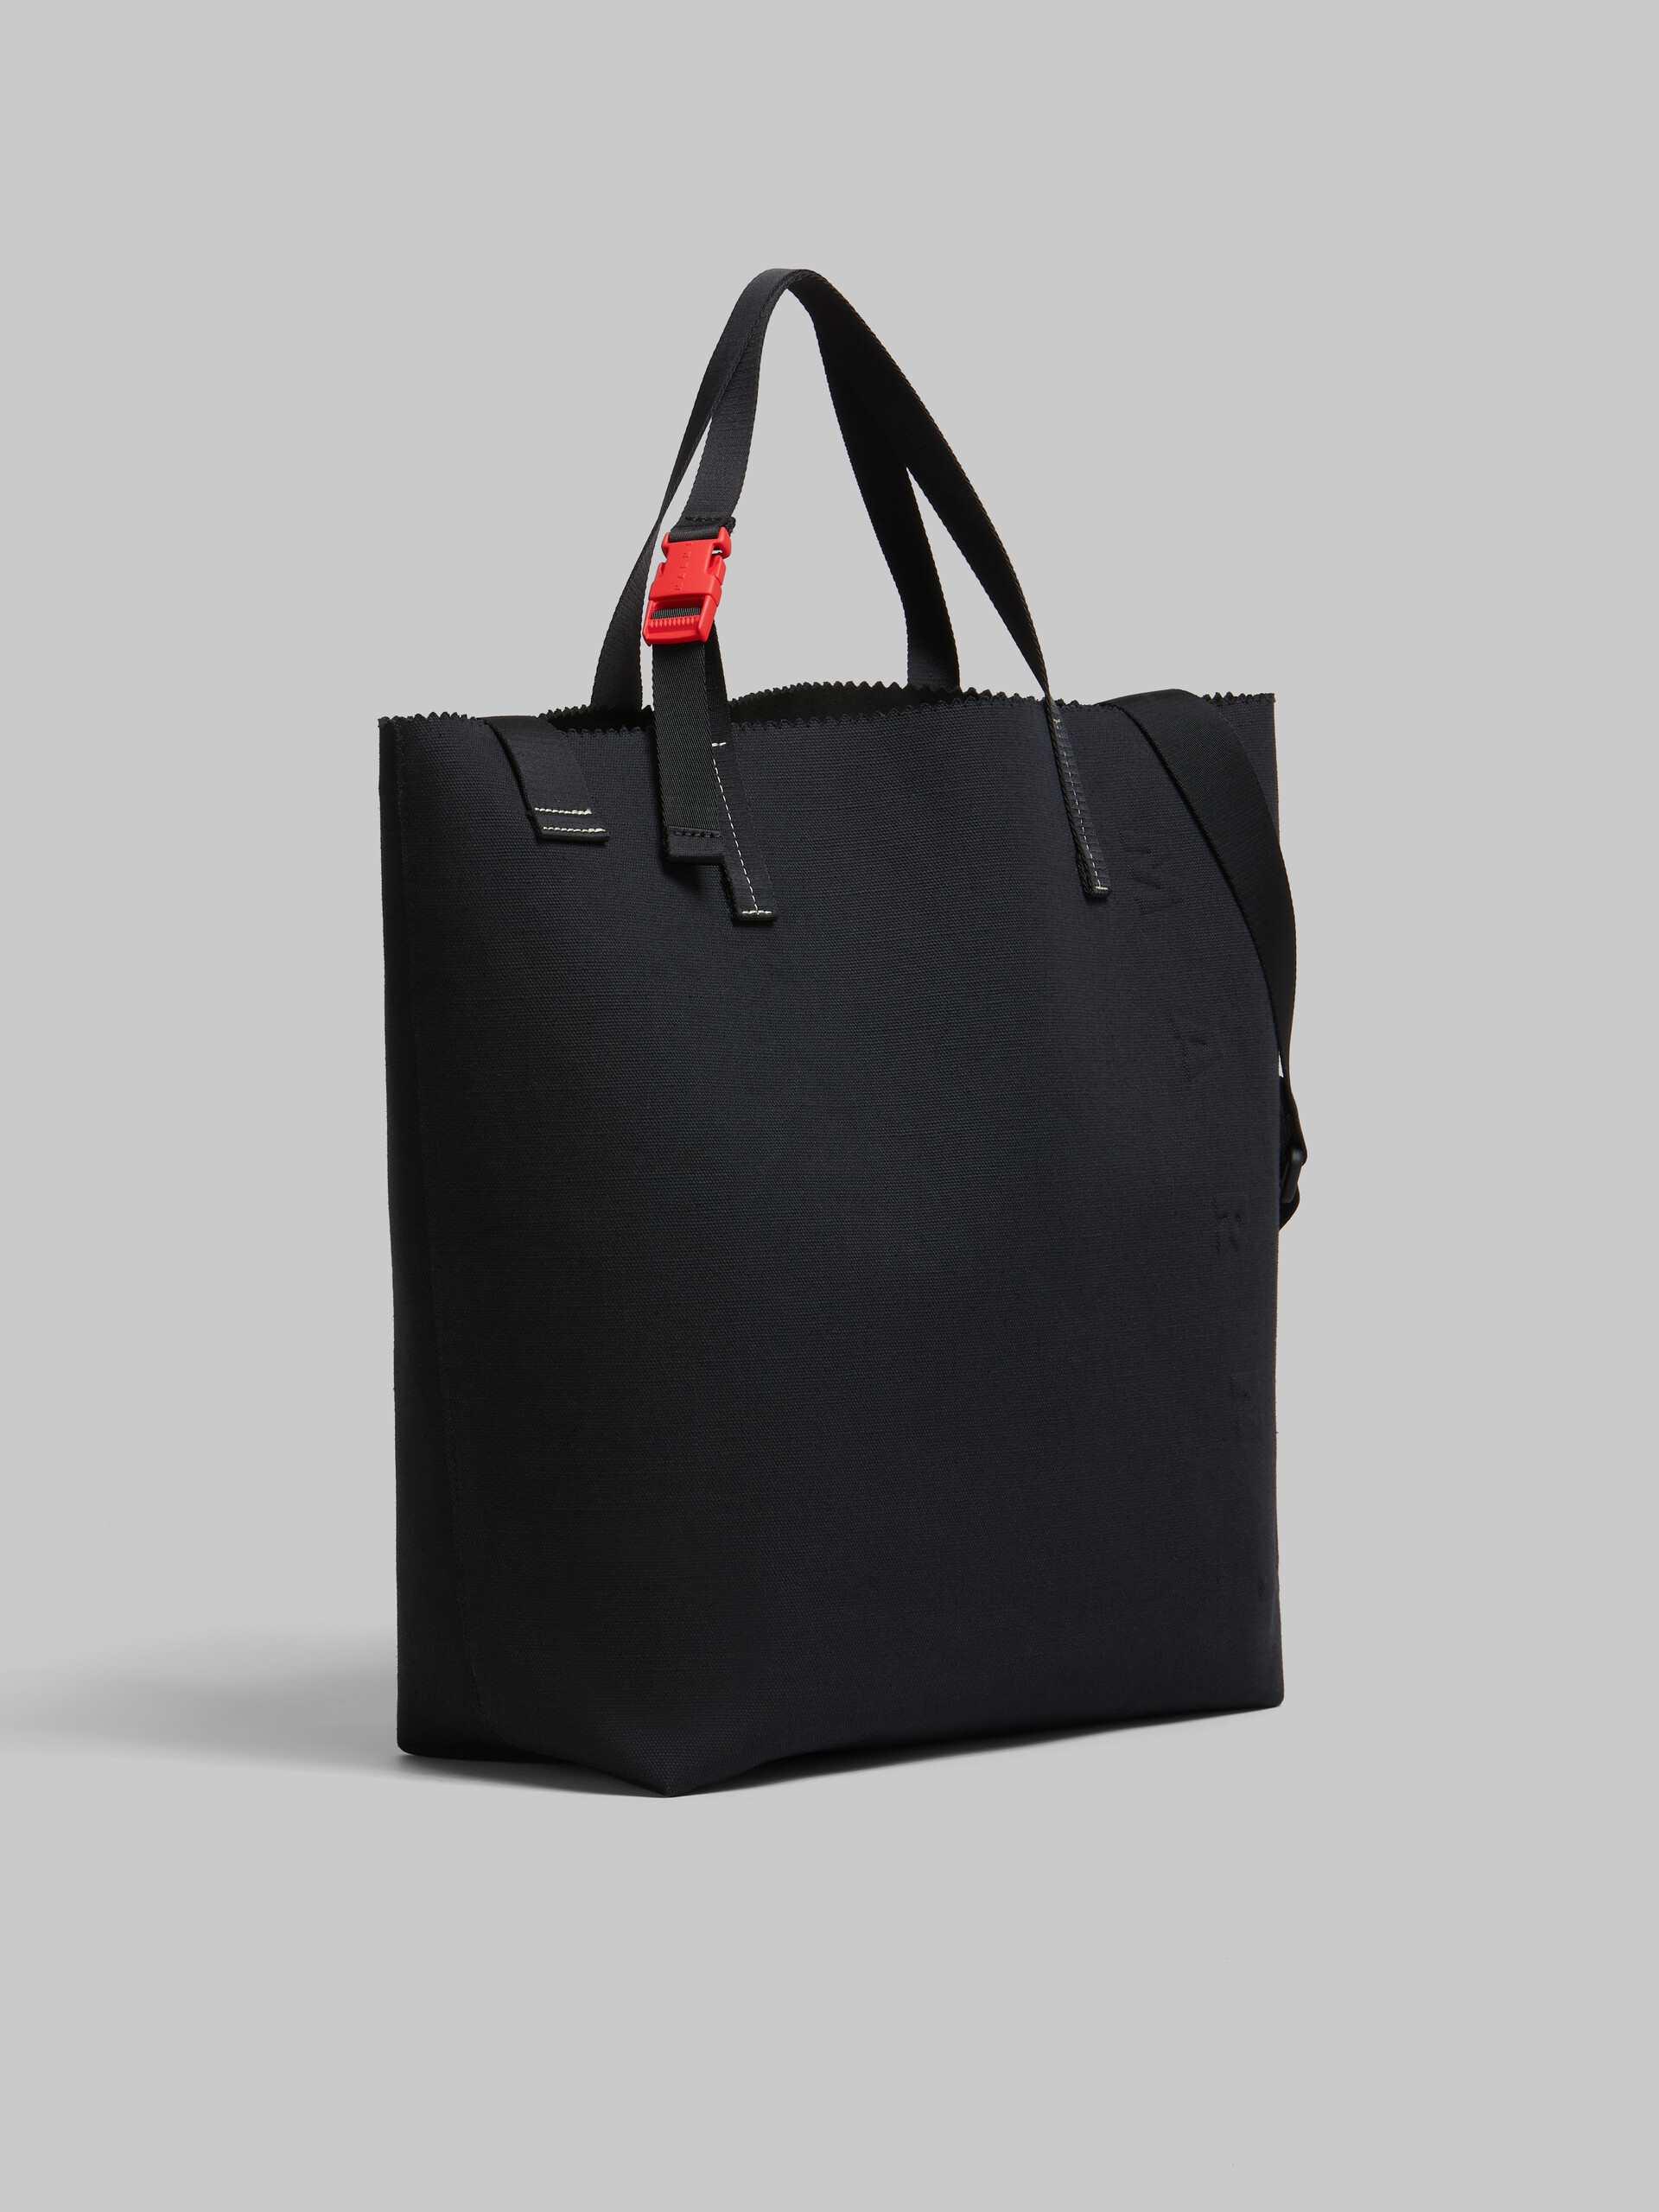 Tribeca Shopping Bag in tela nera con logo Marni in rilievo - Borse shopping - Image 6